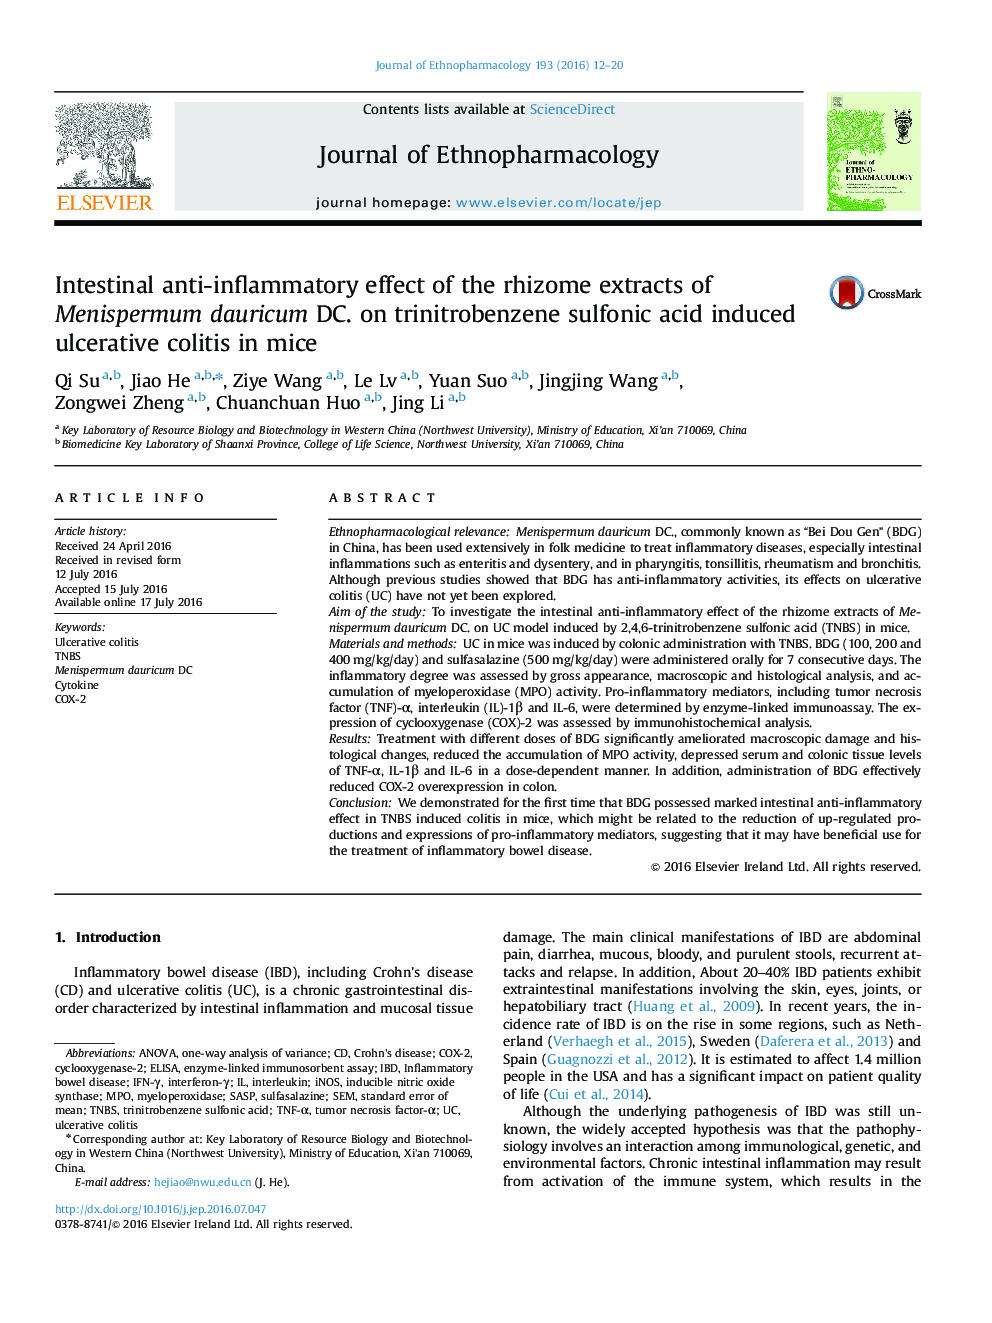 Intestinal anti-inflammatory effect of the rhizome extracts of Menispermum dauricum DC. on trinitrobenzene sulfonic acid induced ulcerative colitis in mice